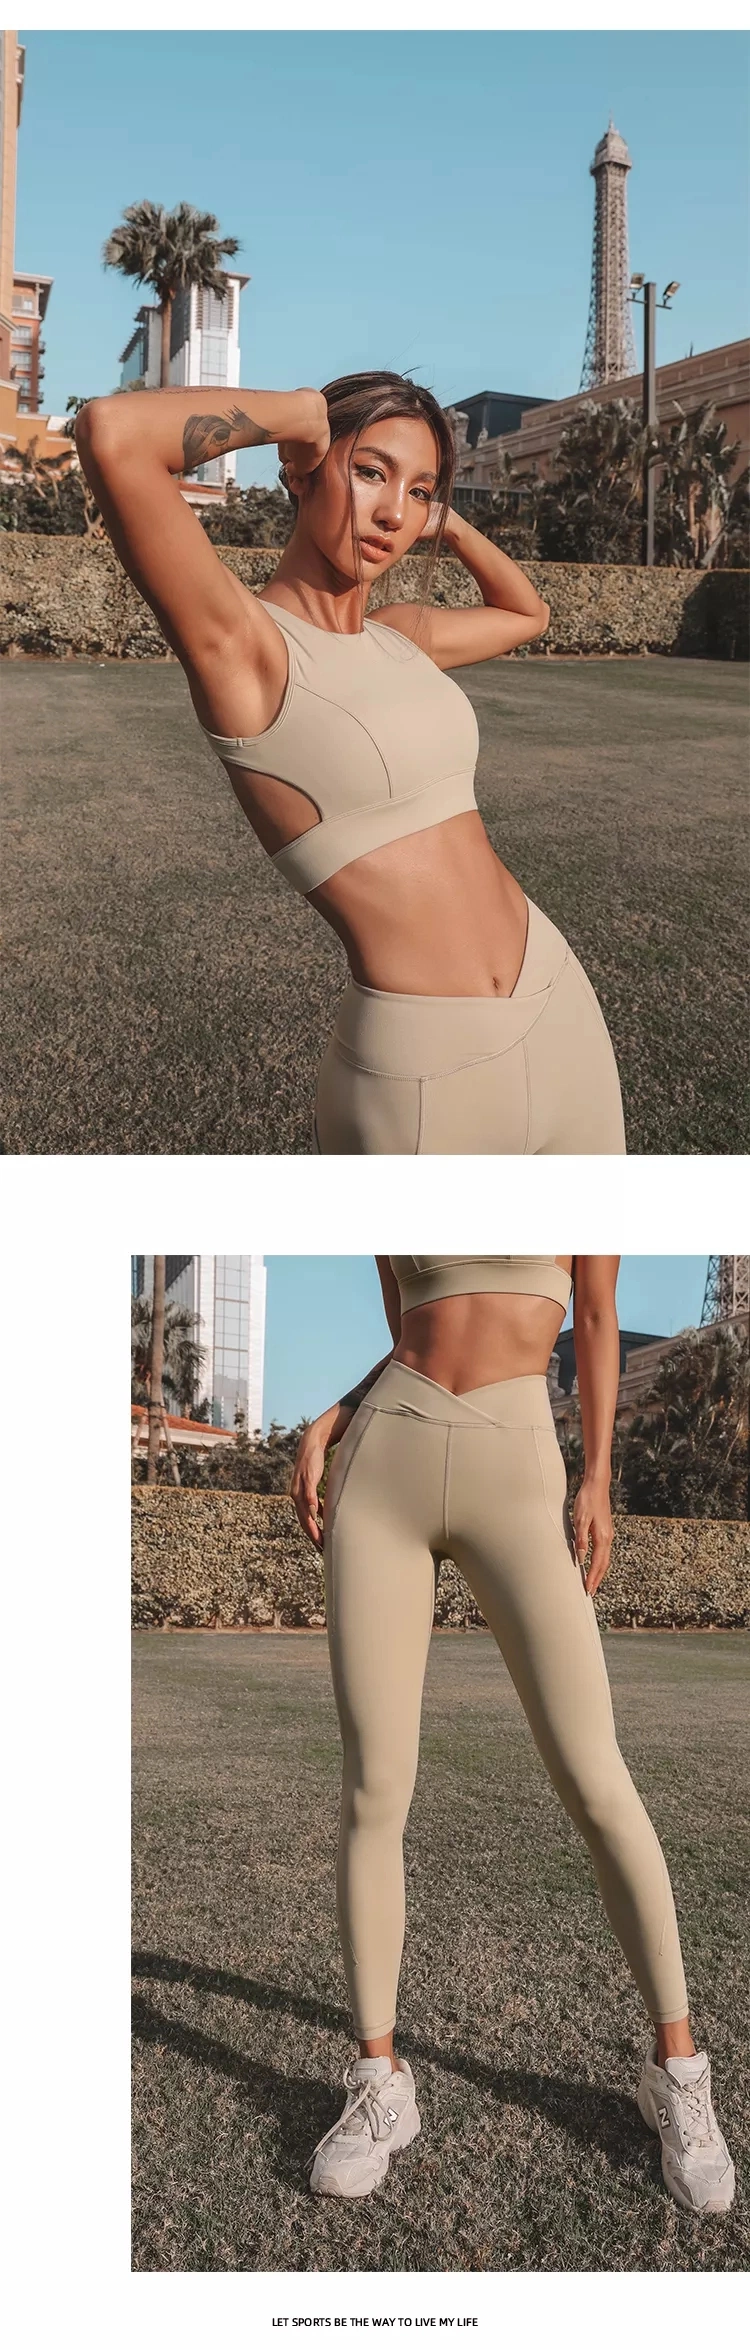 Original Designs Sporstwear Women&prime;s Yoga Fitness Gym Set Breathable Squat Proof Yoga Wear Leggings